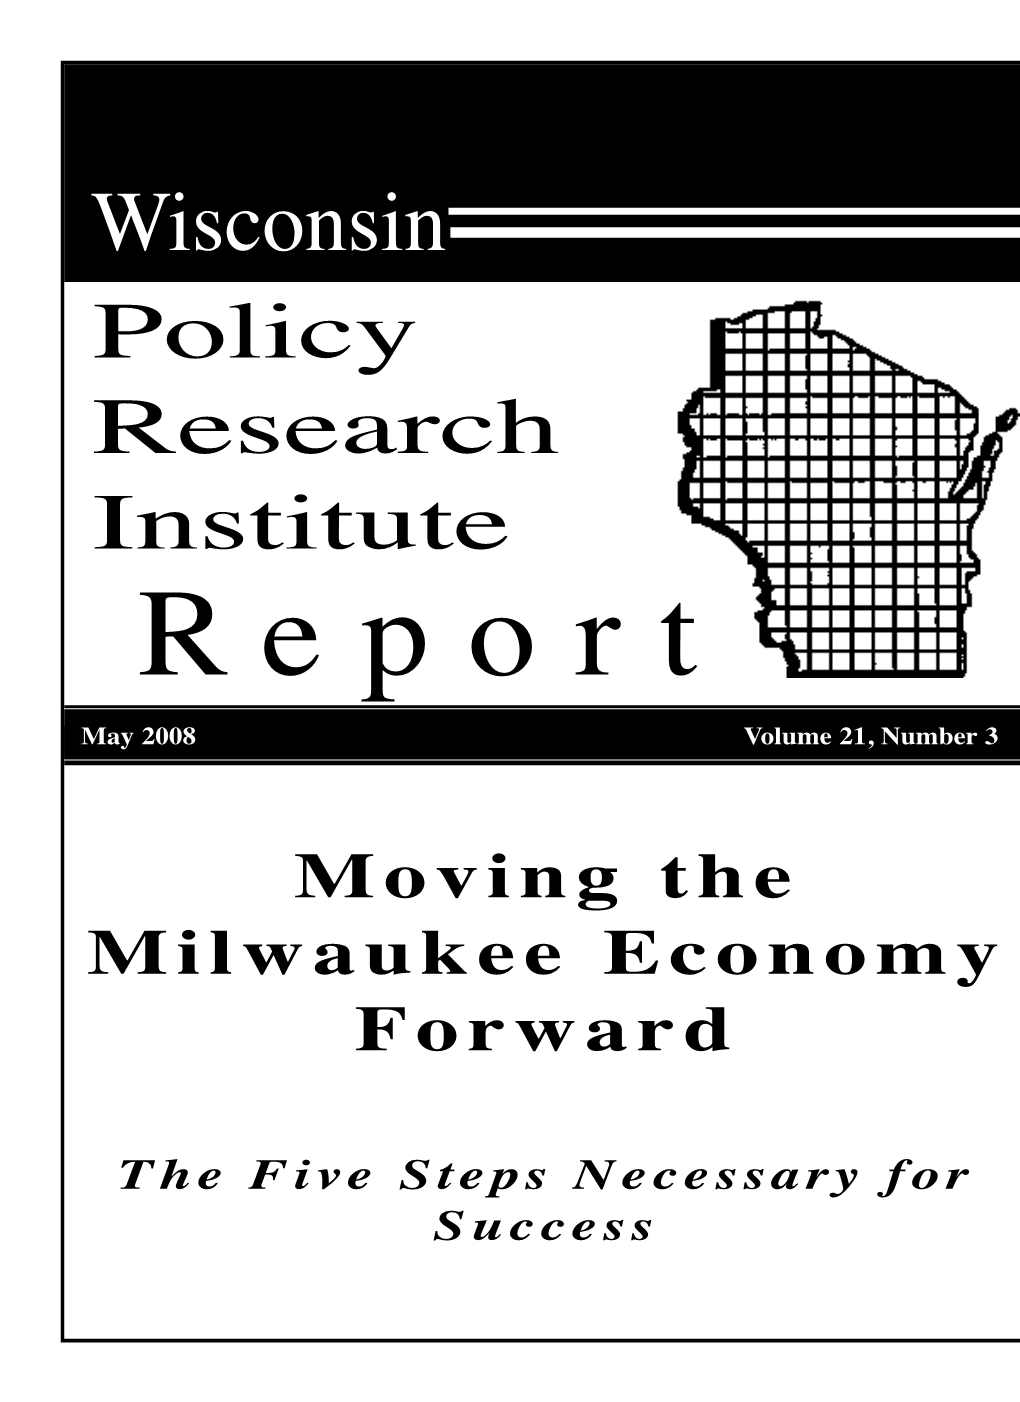 Moving the Milwaukee Economy Forward